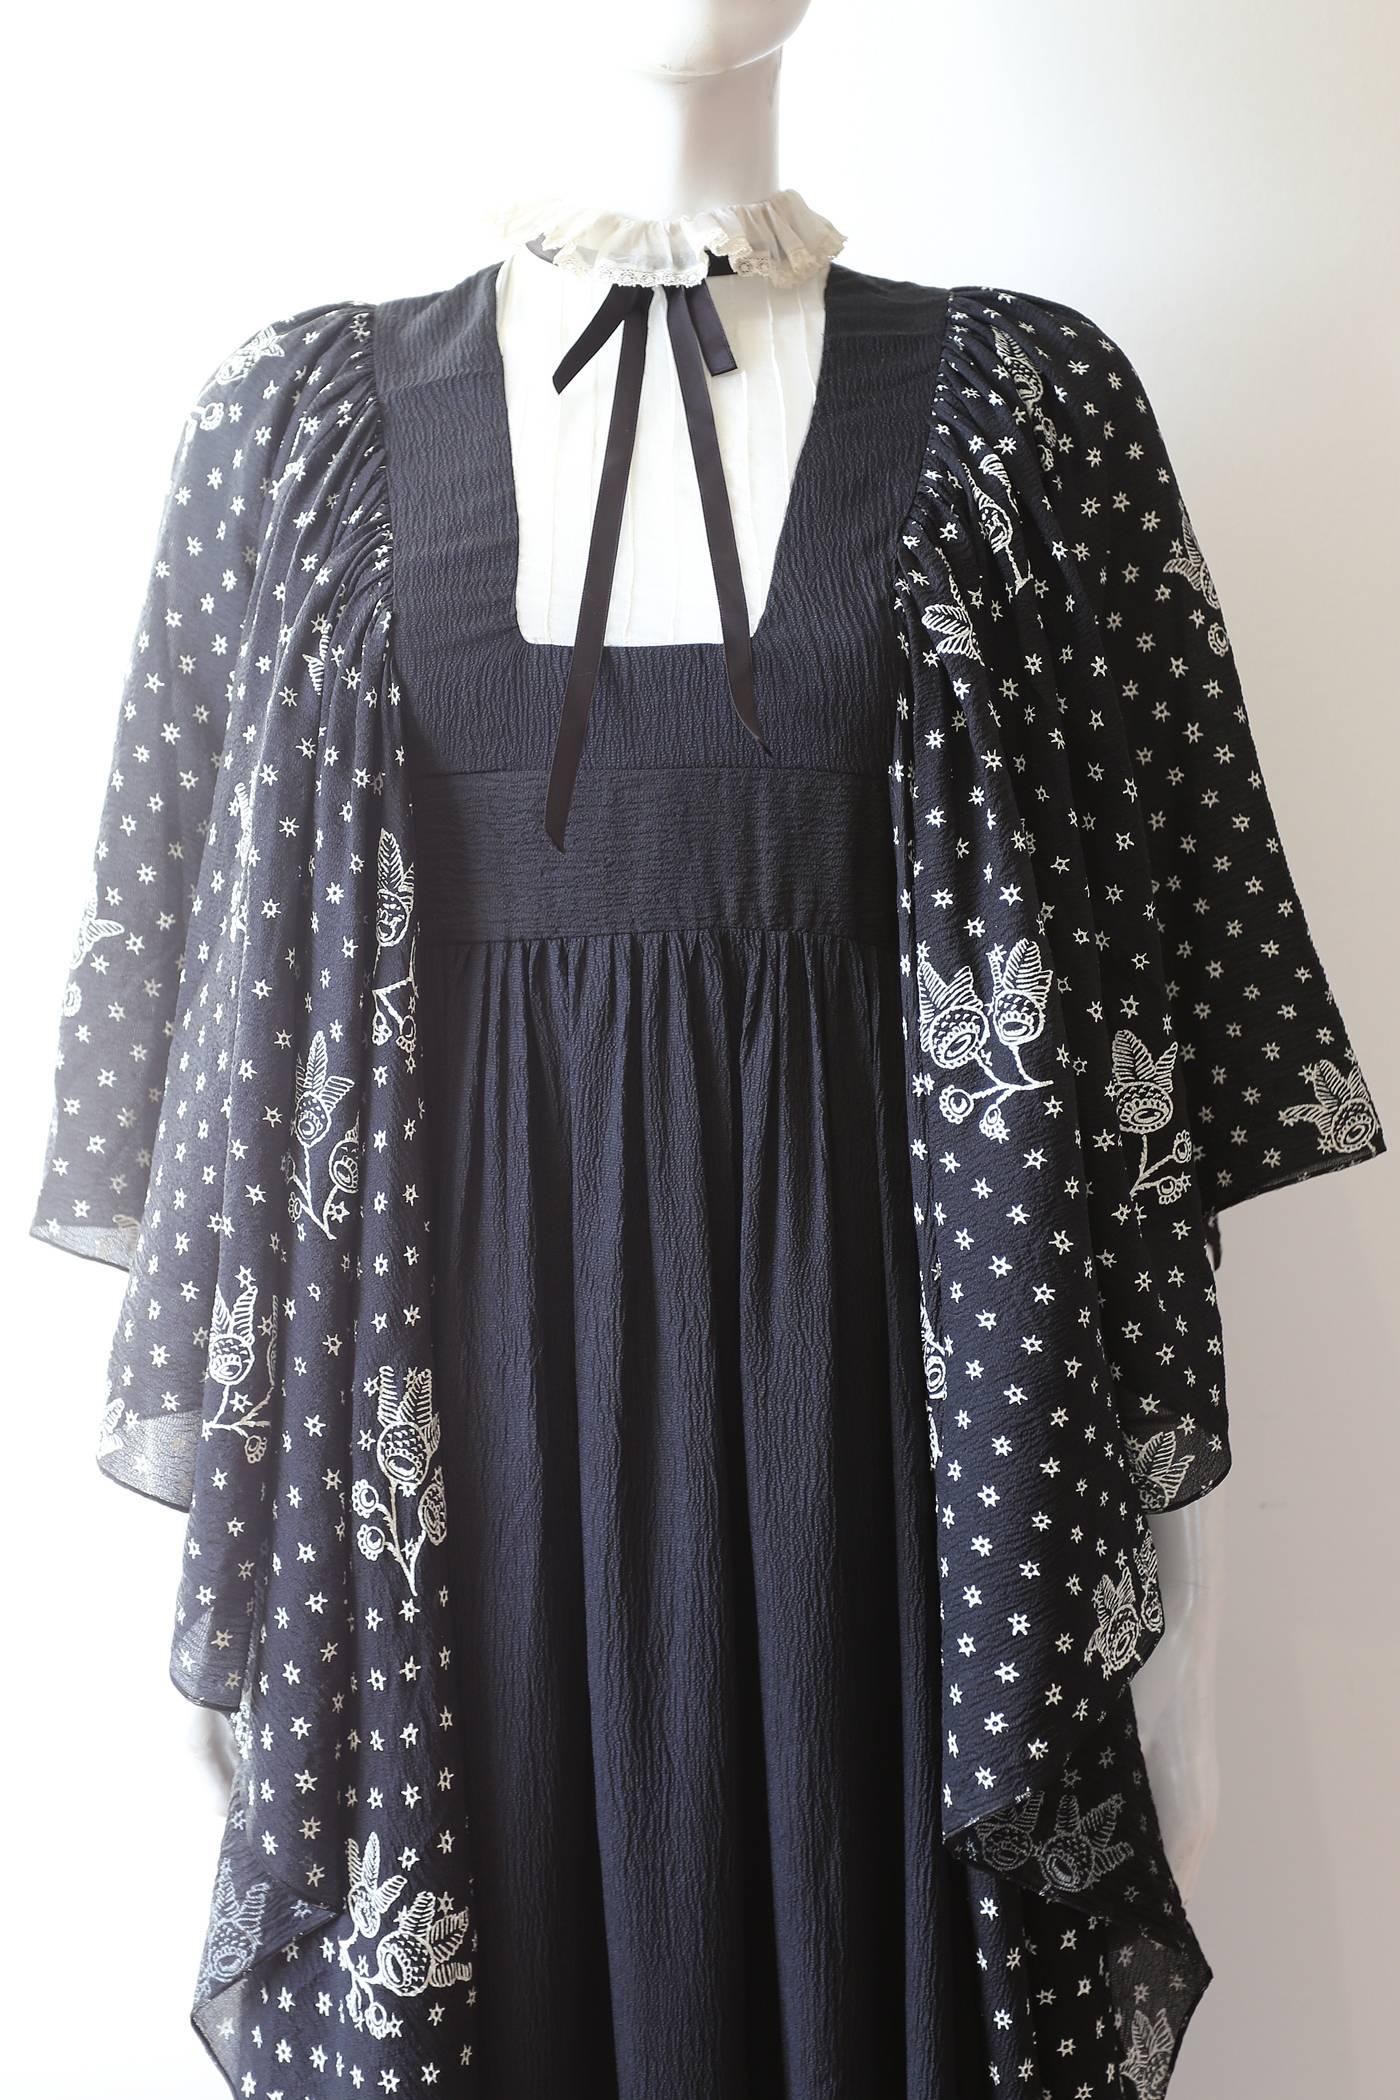 Black Gina Fratini crêpe-silk evening dress with star print, c. 1970